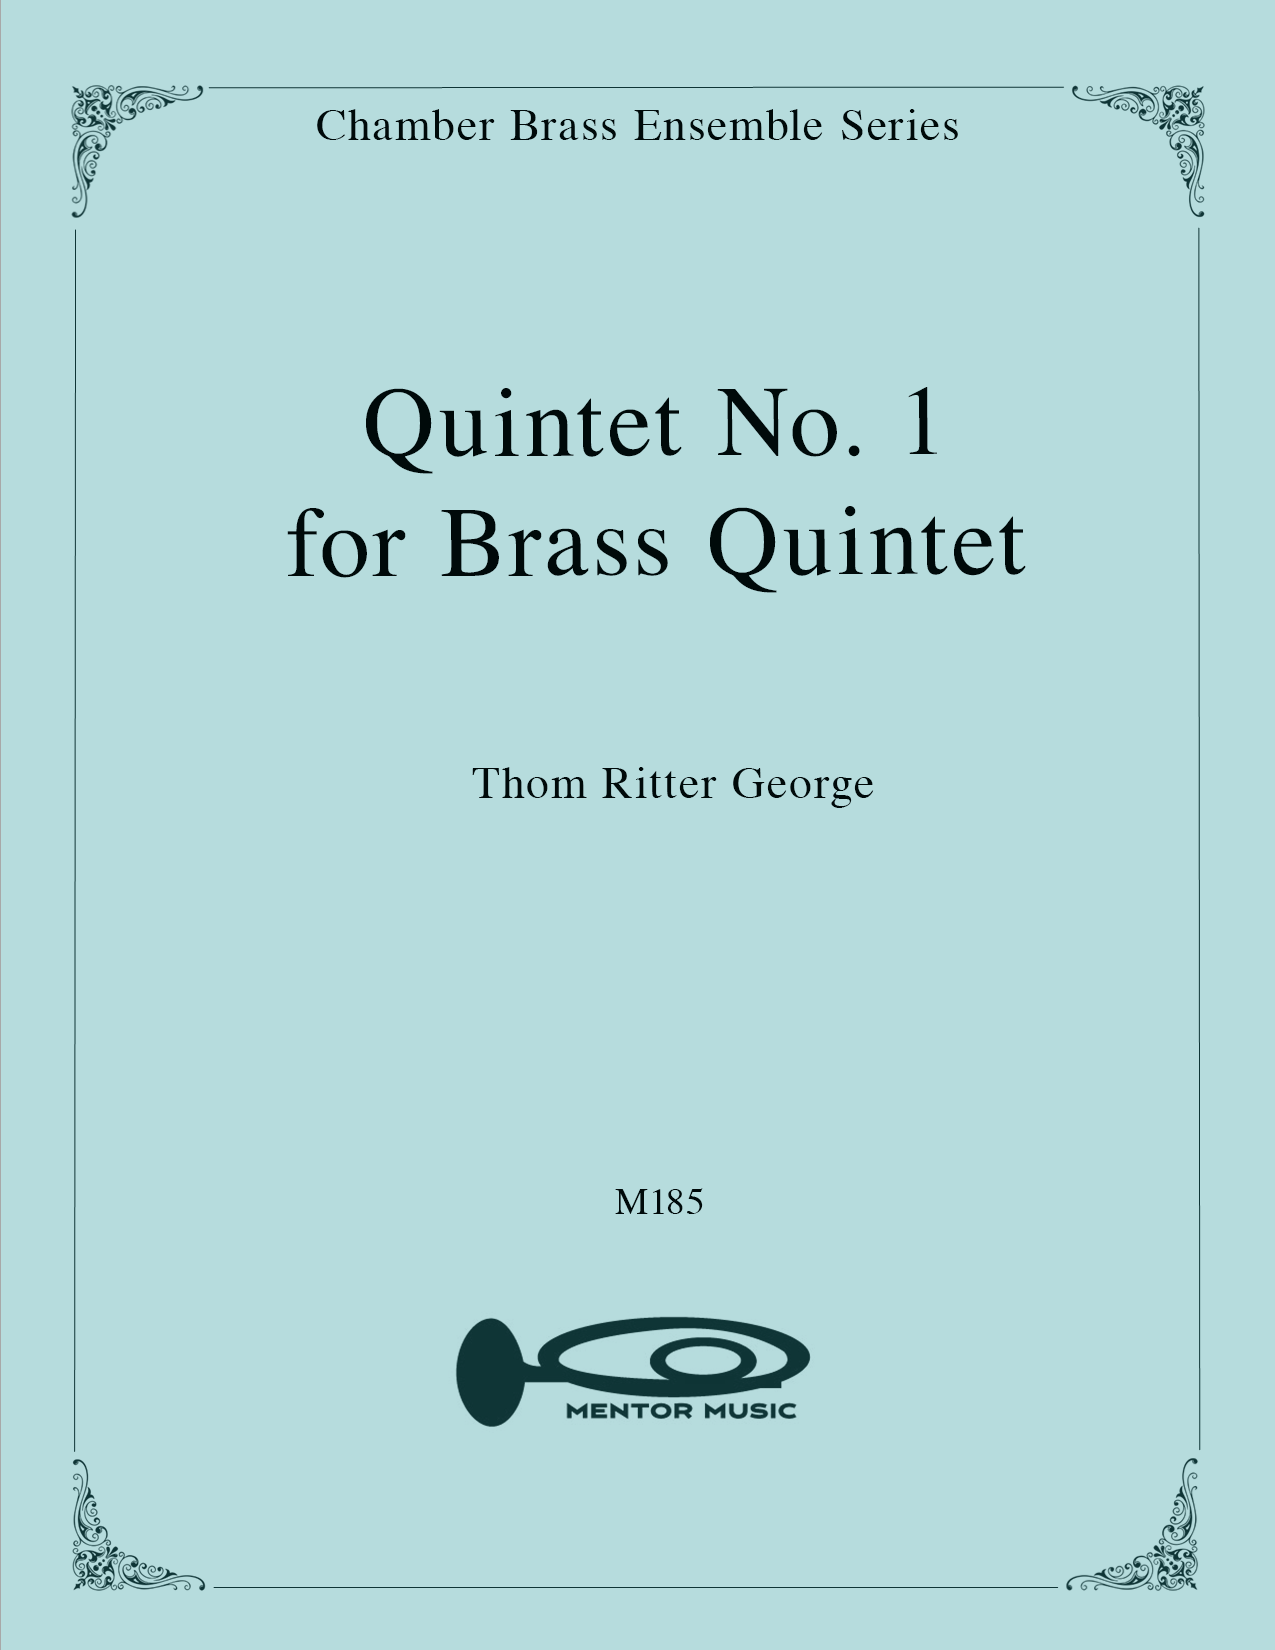 Quintet No. 1 for Brass Quintet